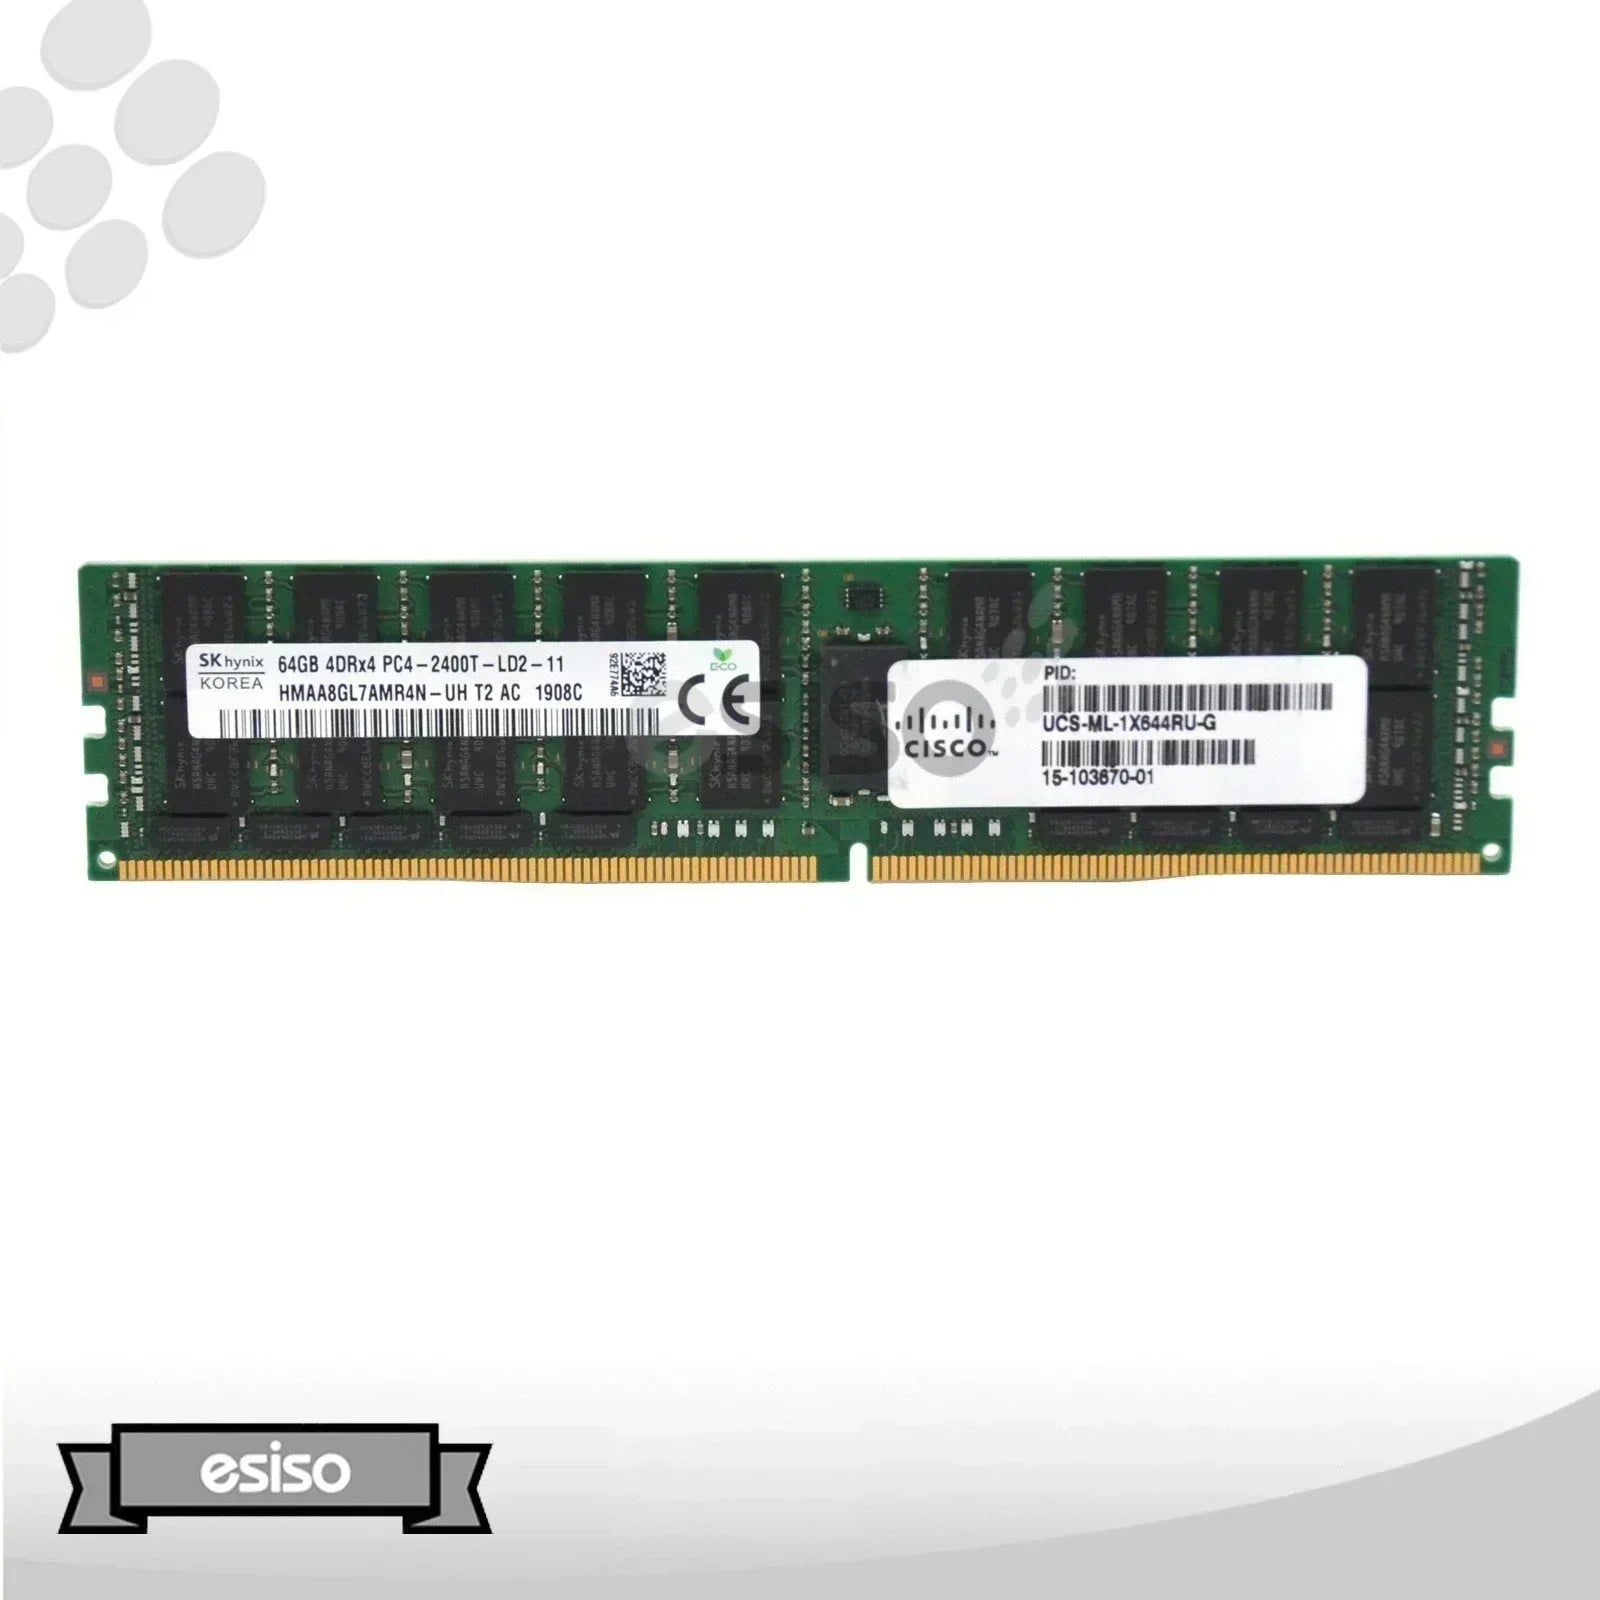 15-103670-01 HMAA8GL7AMR4N-UH CISCO 64GB 4DRX4 PC4-2400T DDR4 MEMORY (1x64GB)